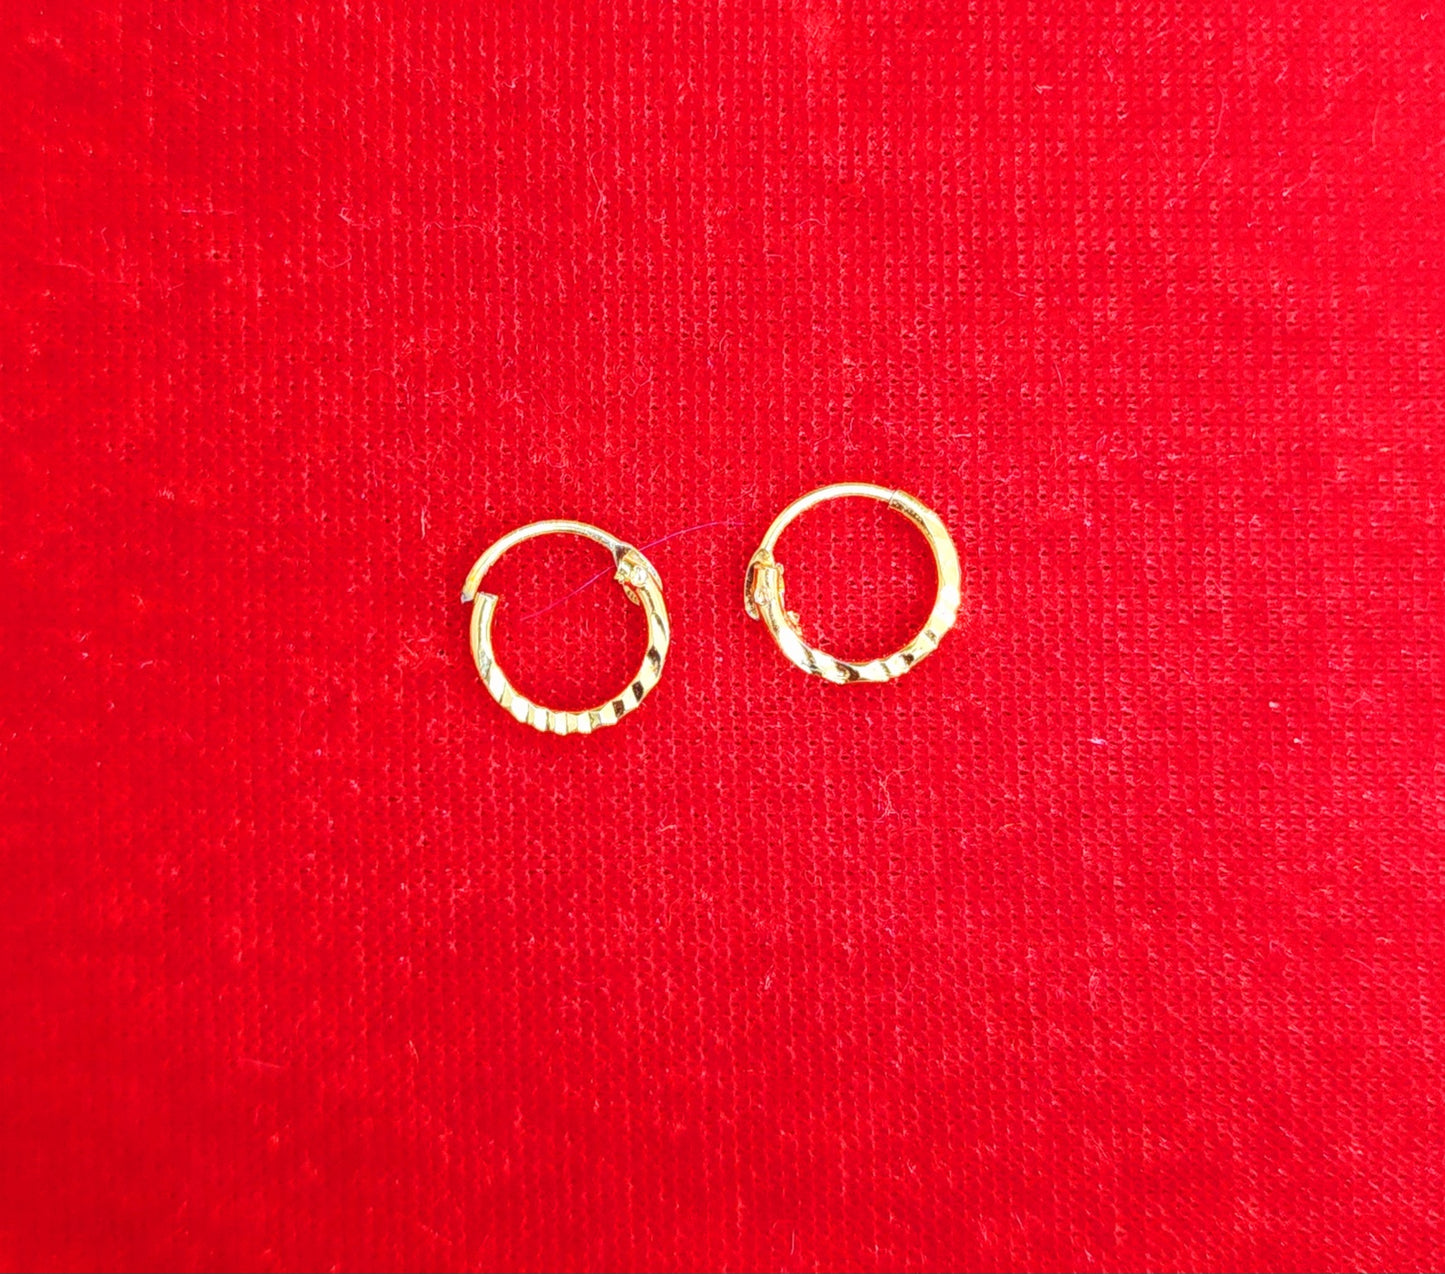 beautiful earring for laddu gopal ji (ER -14)